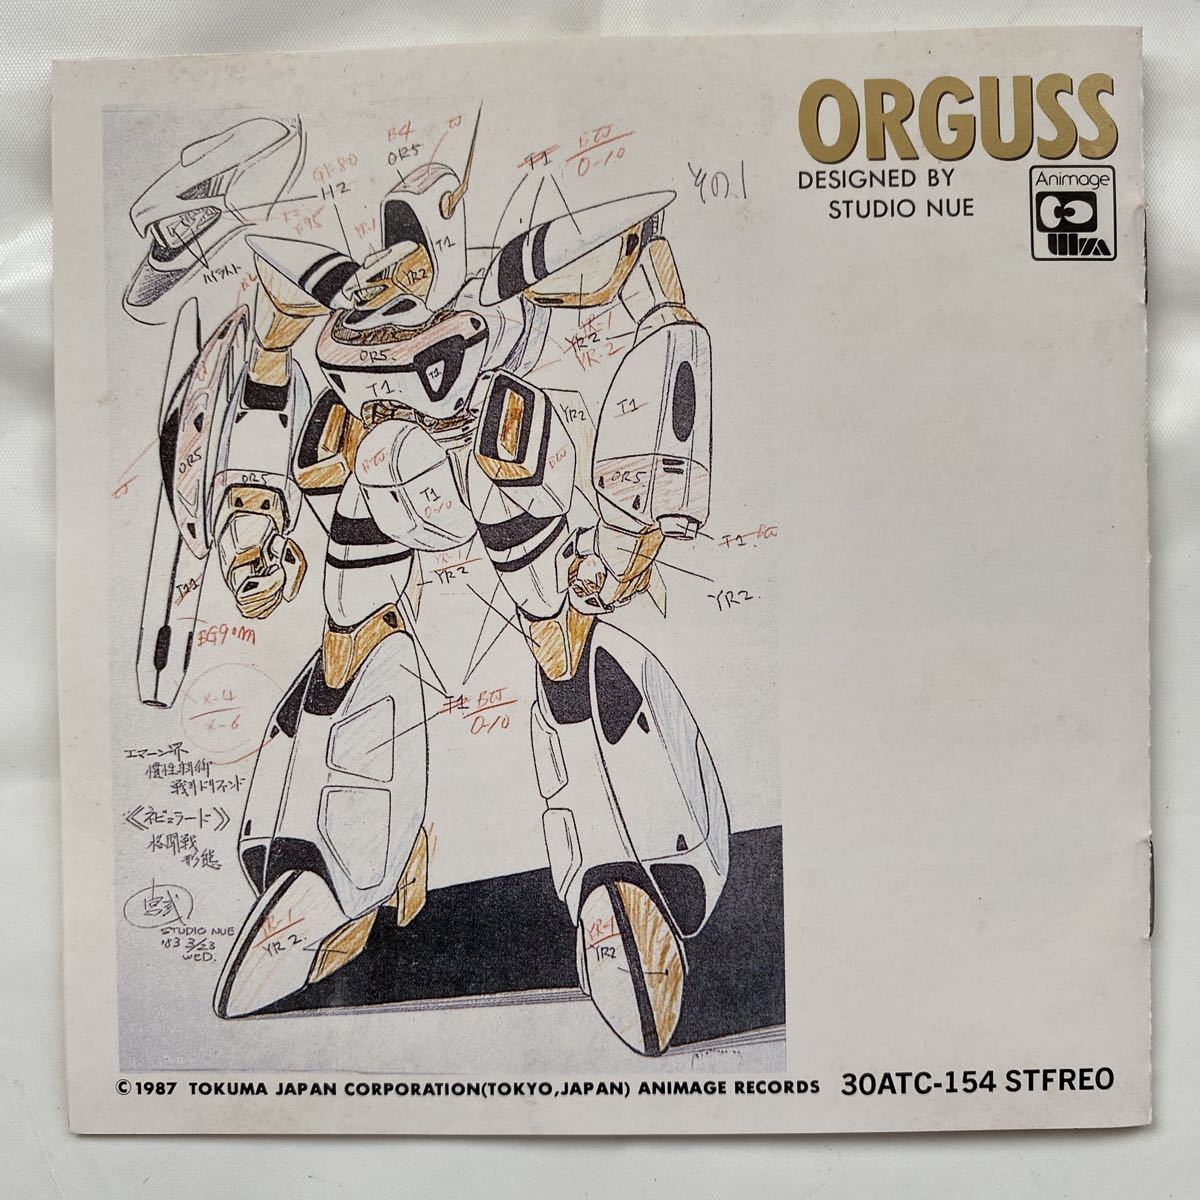  Choujikuu Seiki Orguss оригинал саундтрек б/у товар 